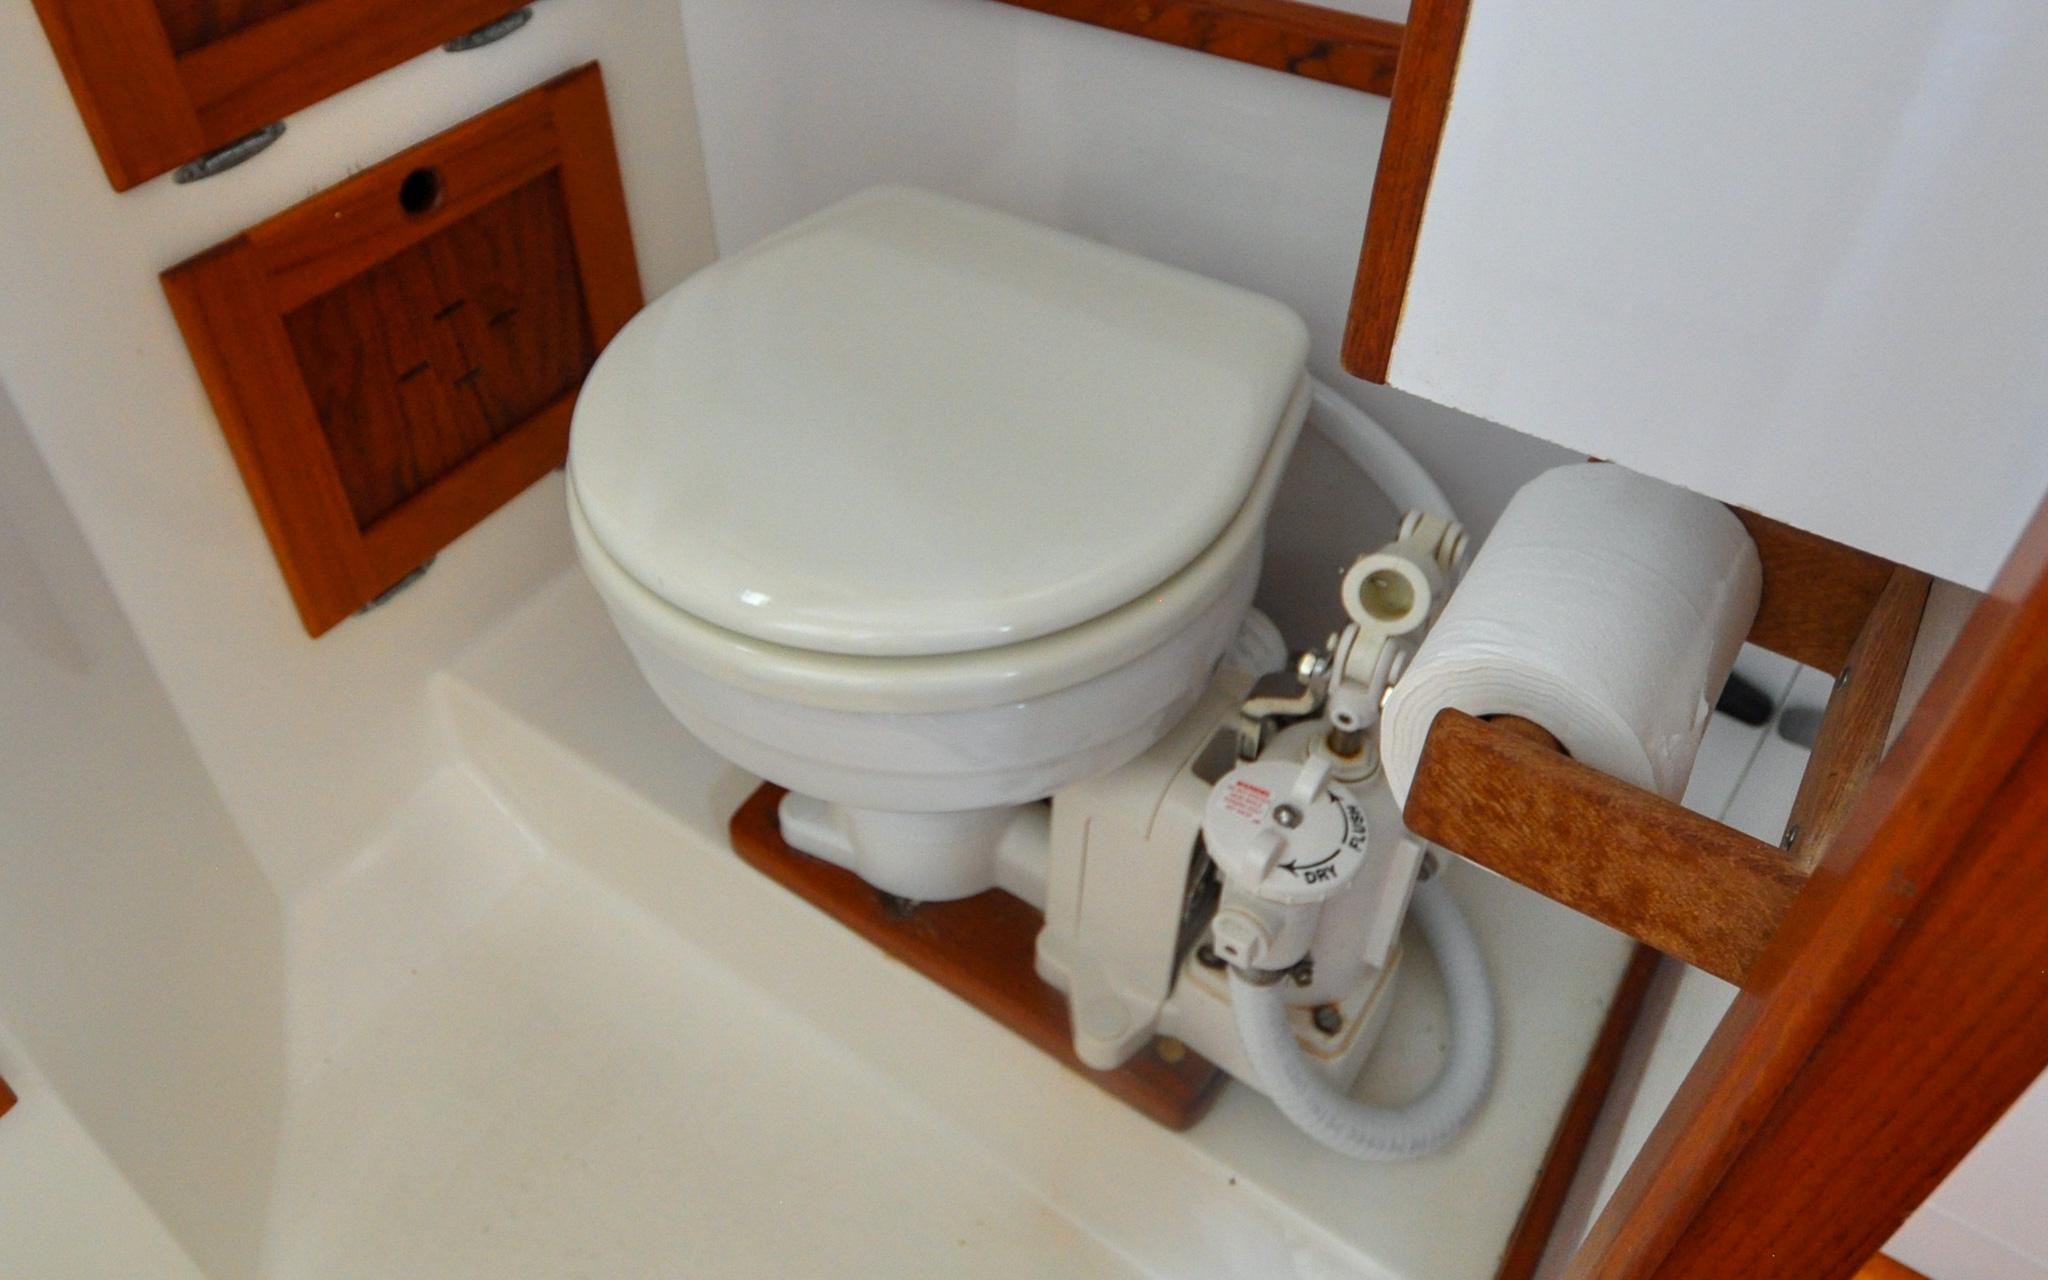 Wilbur 34 - Kingfisher - Cabin - Head - Electric Toilet